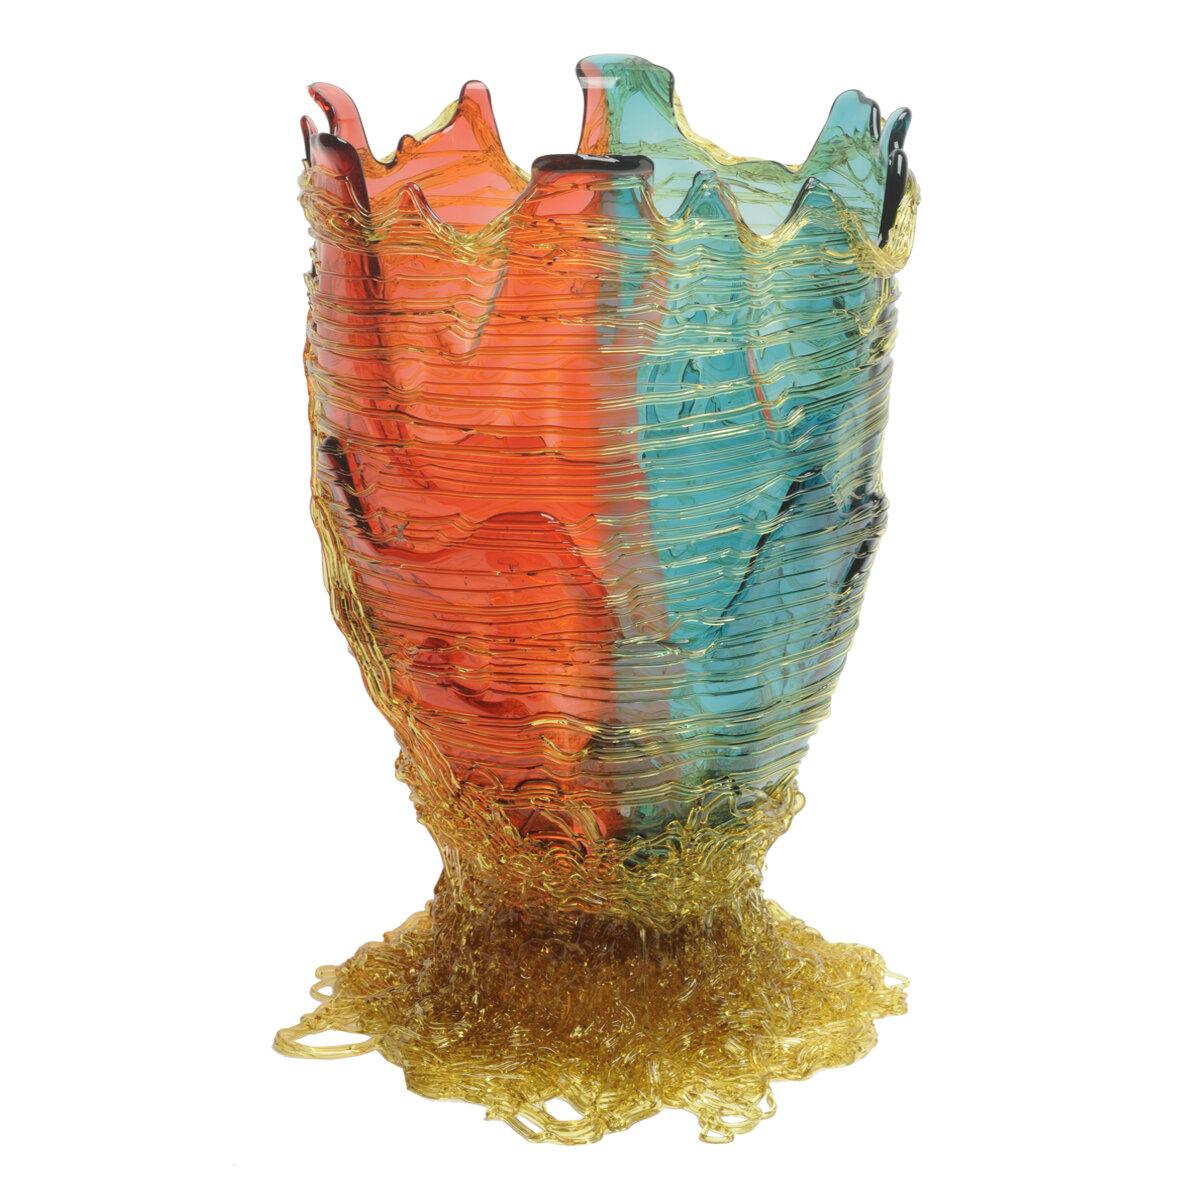 italien Vase contemporain Gaetano Pesce Spaghetti XL en résine fuchsia, ambre et aqua en vente